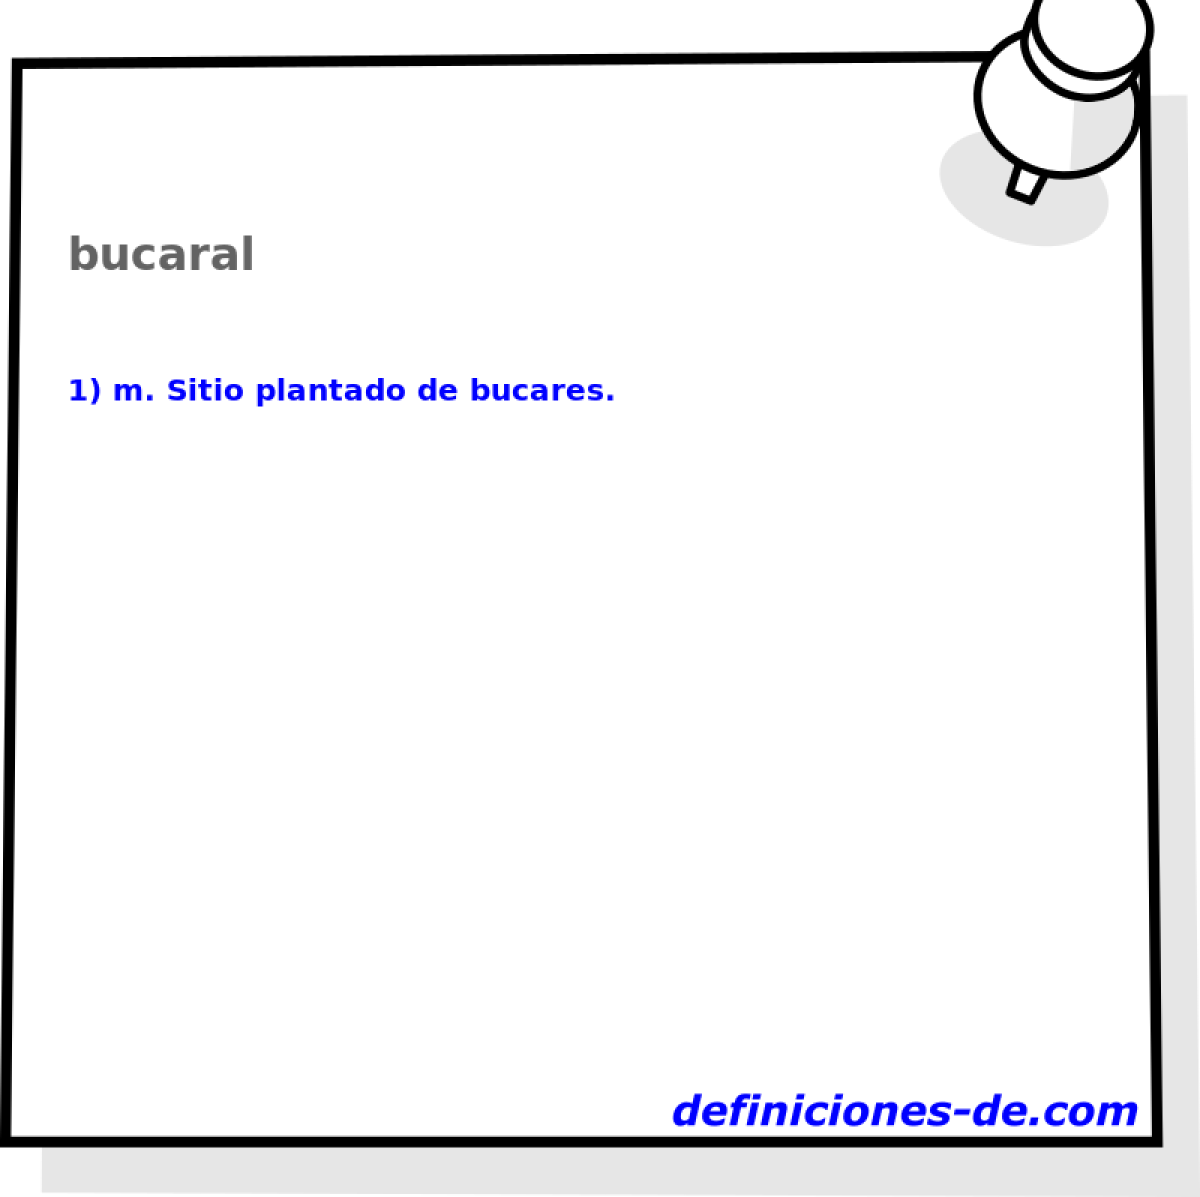 bucaral 